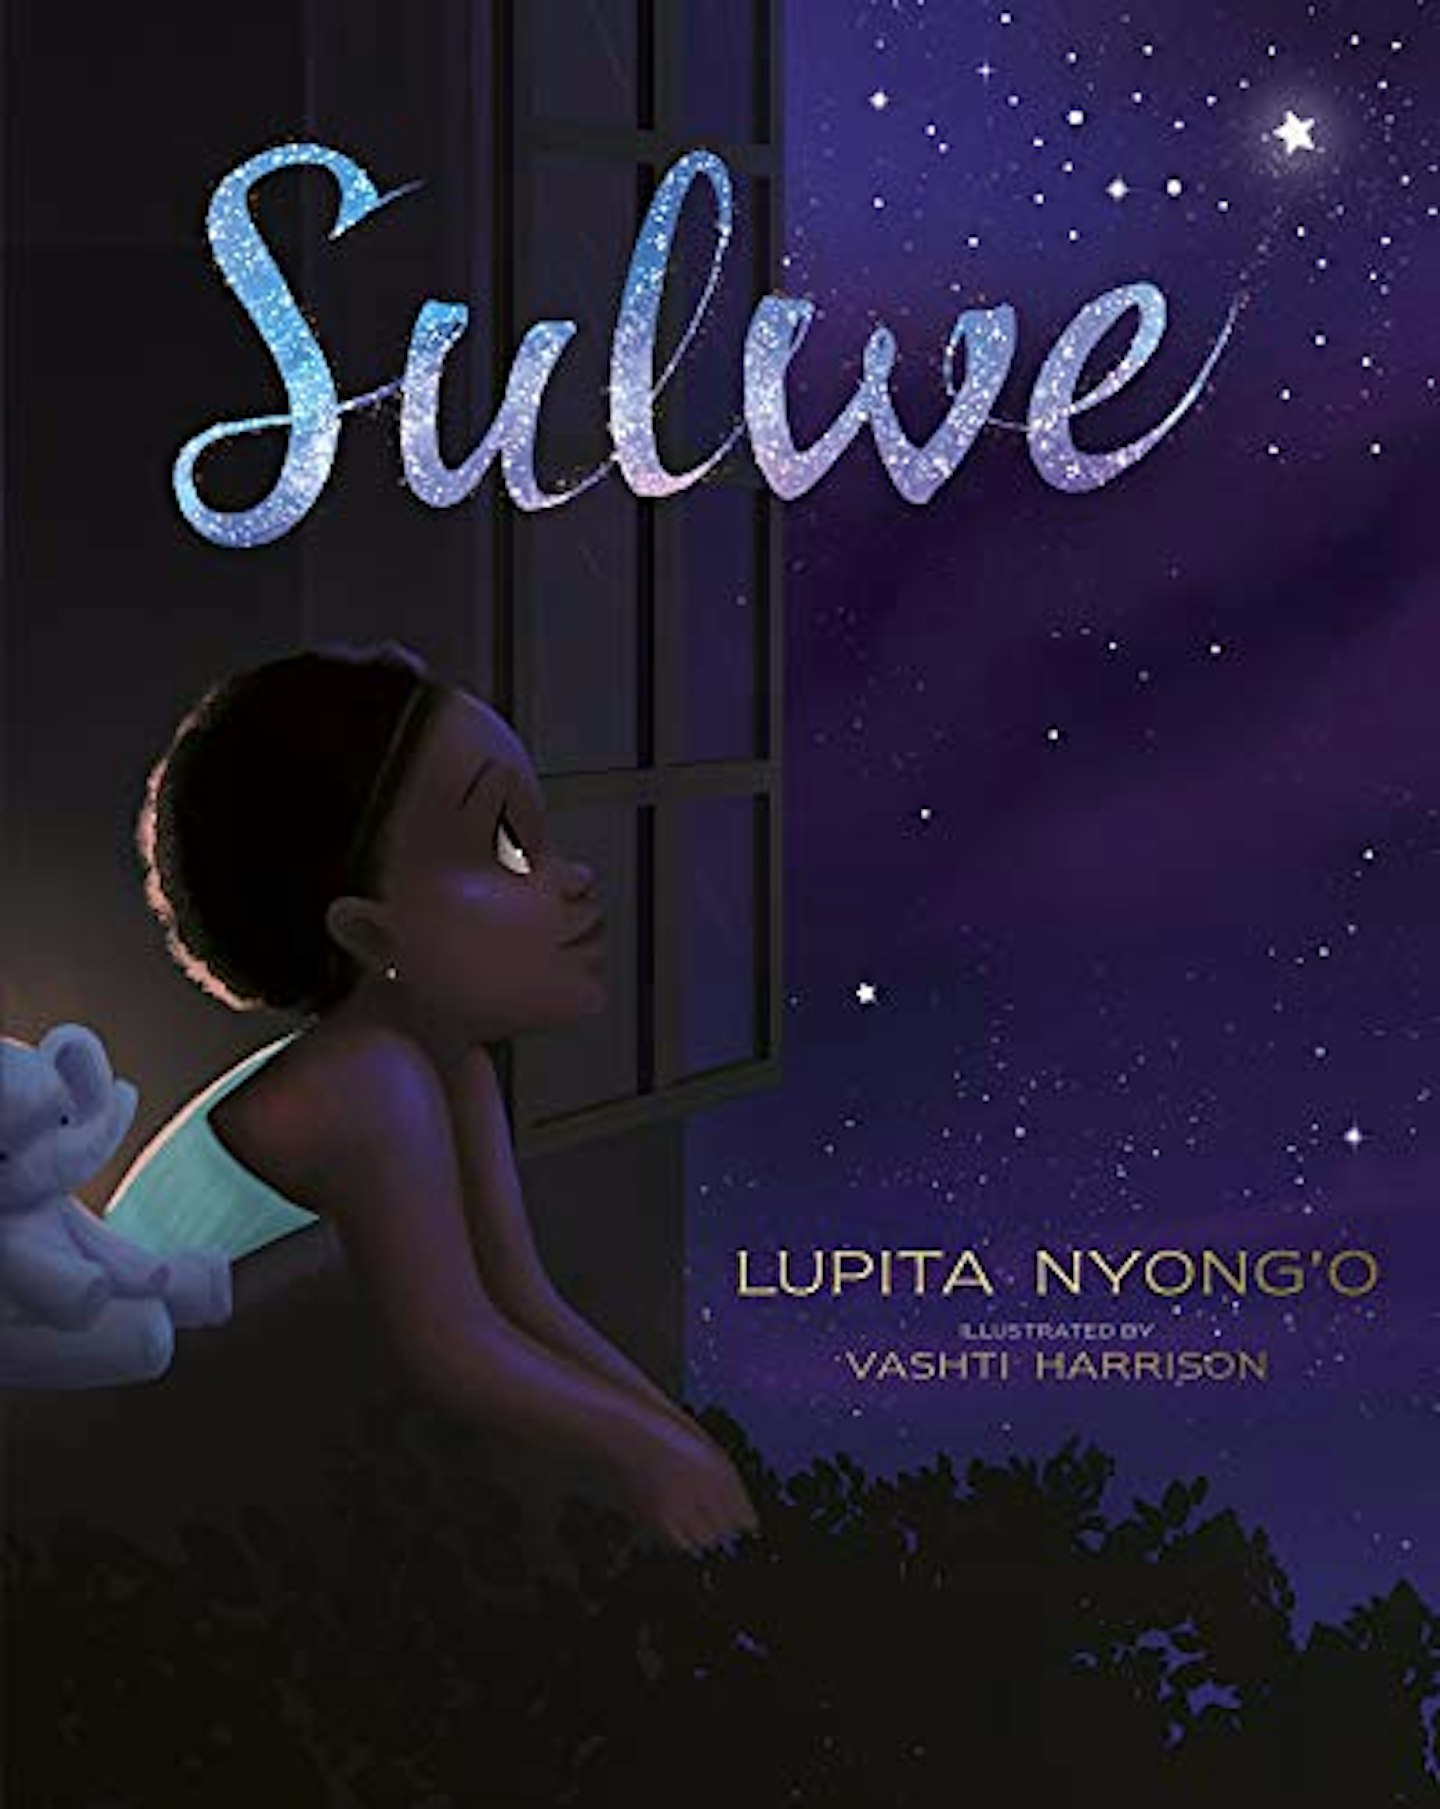 Sulwe by Lupita Nyongu0026#039;o